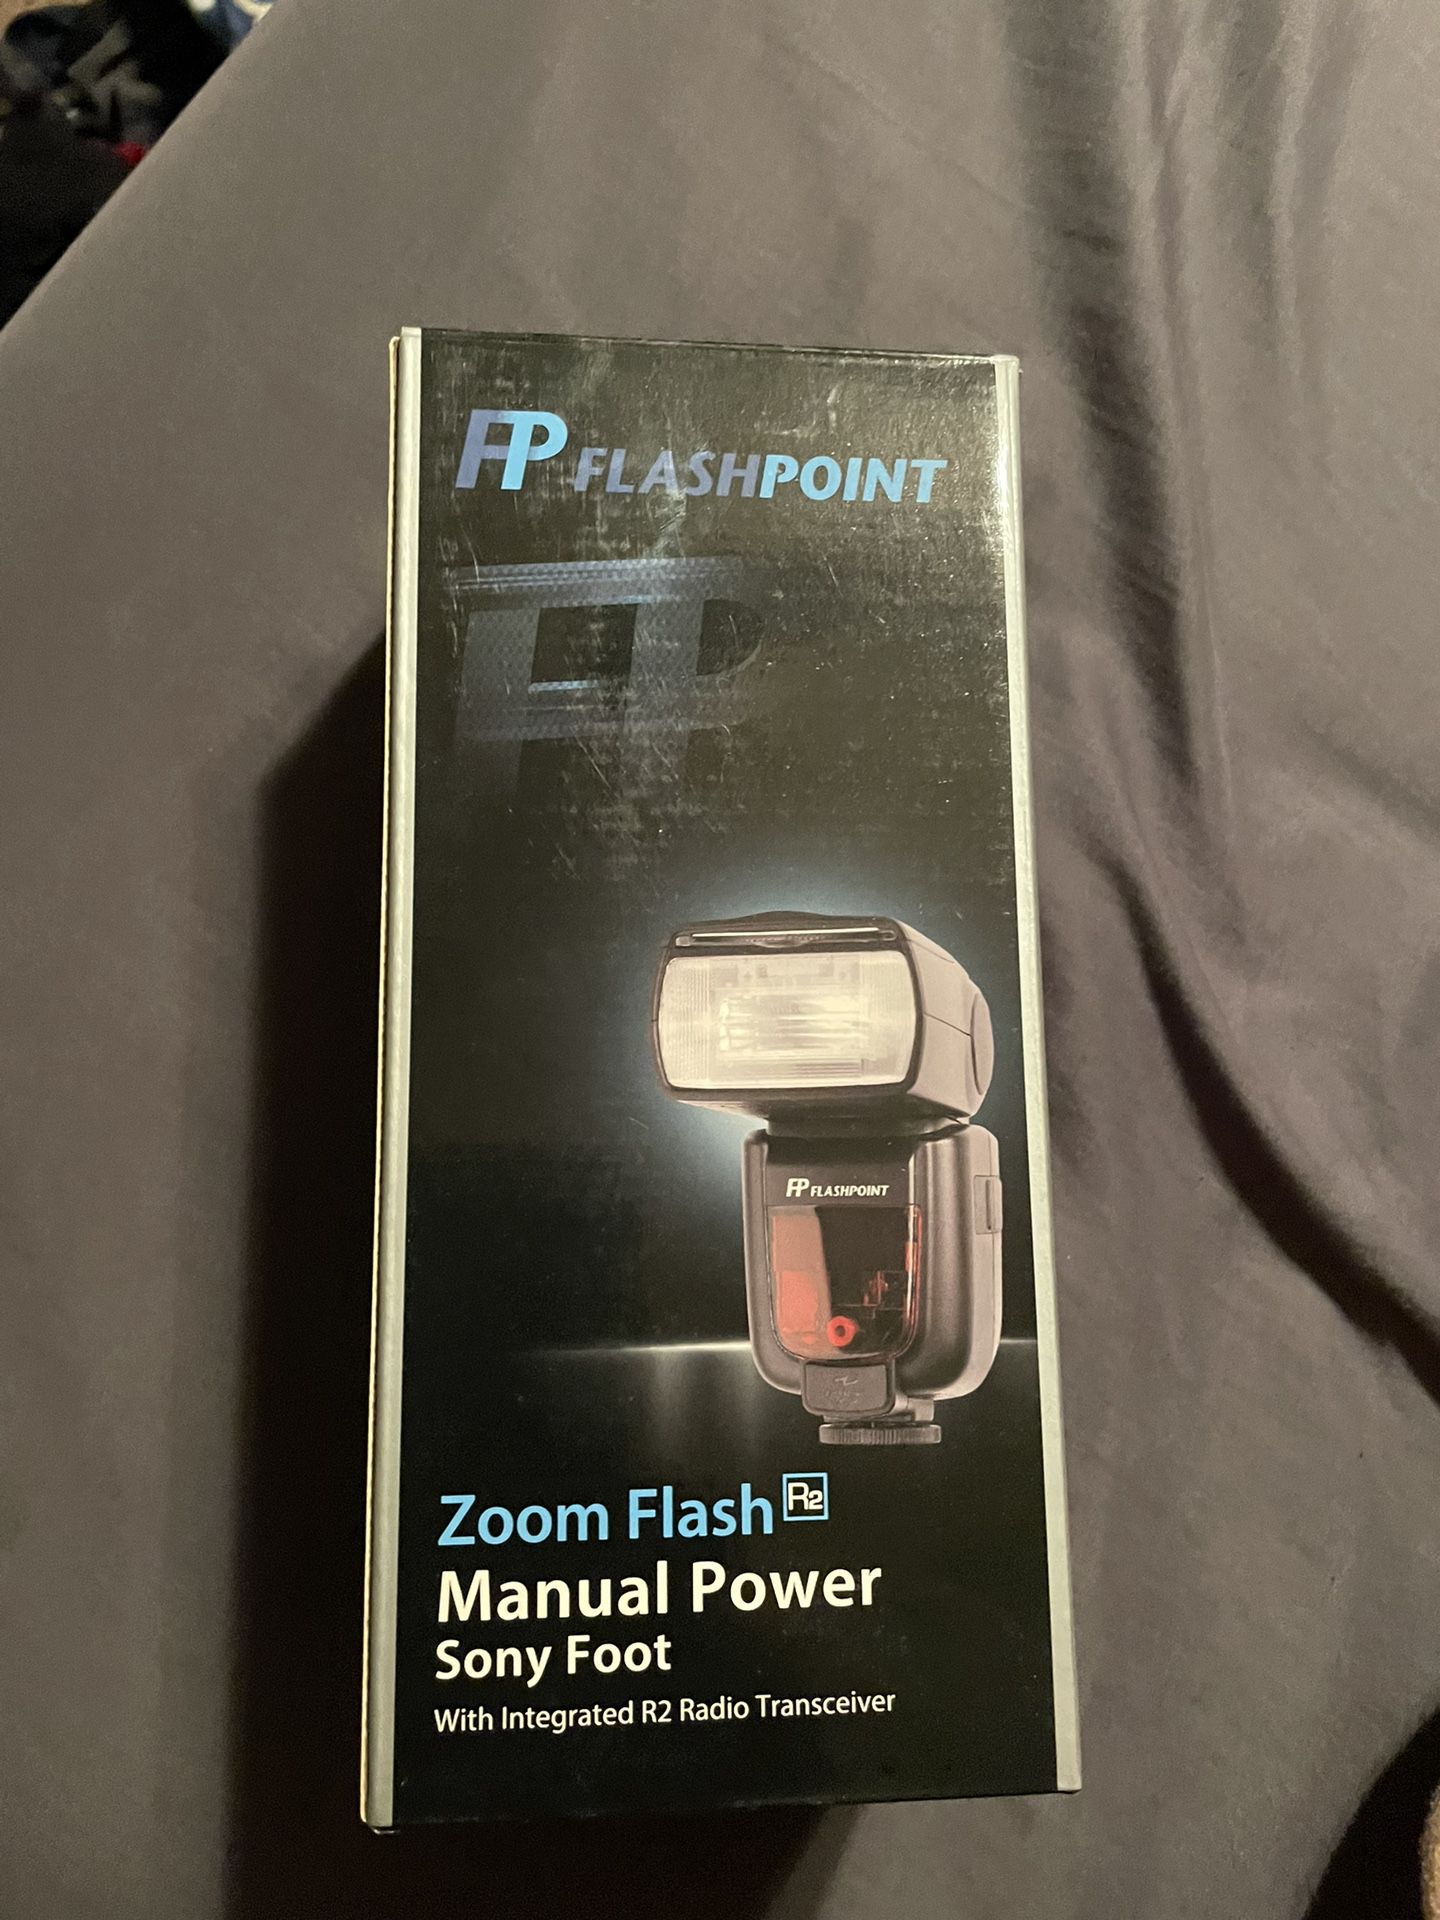 Flashpoint Zoom Flash R2 